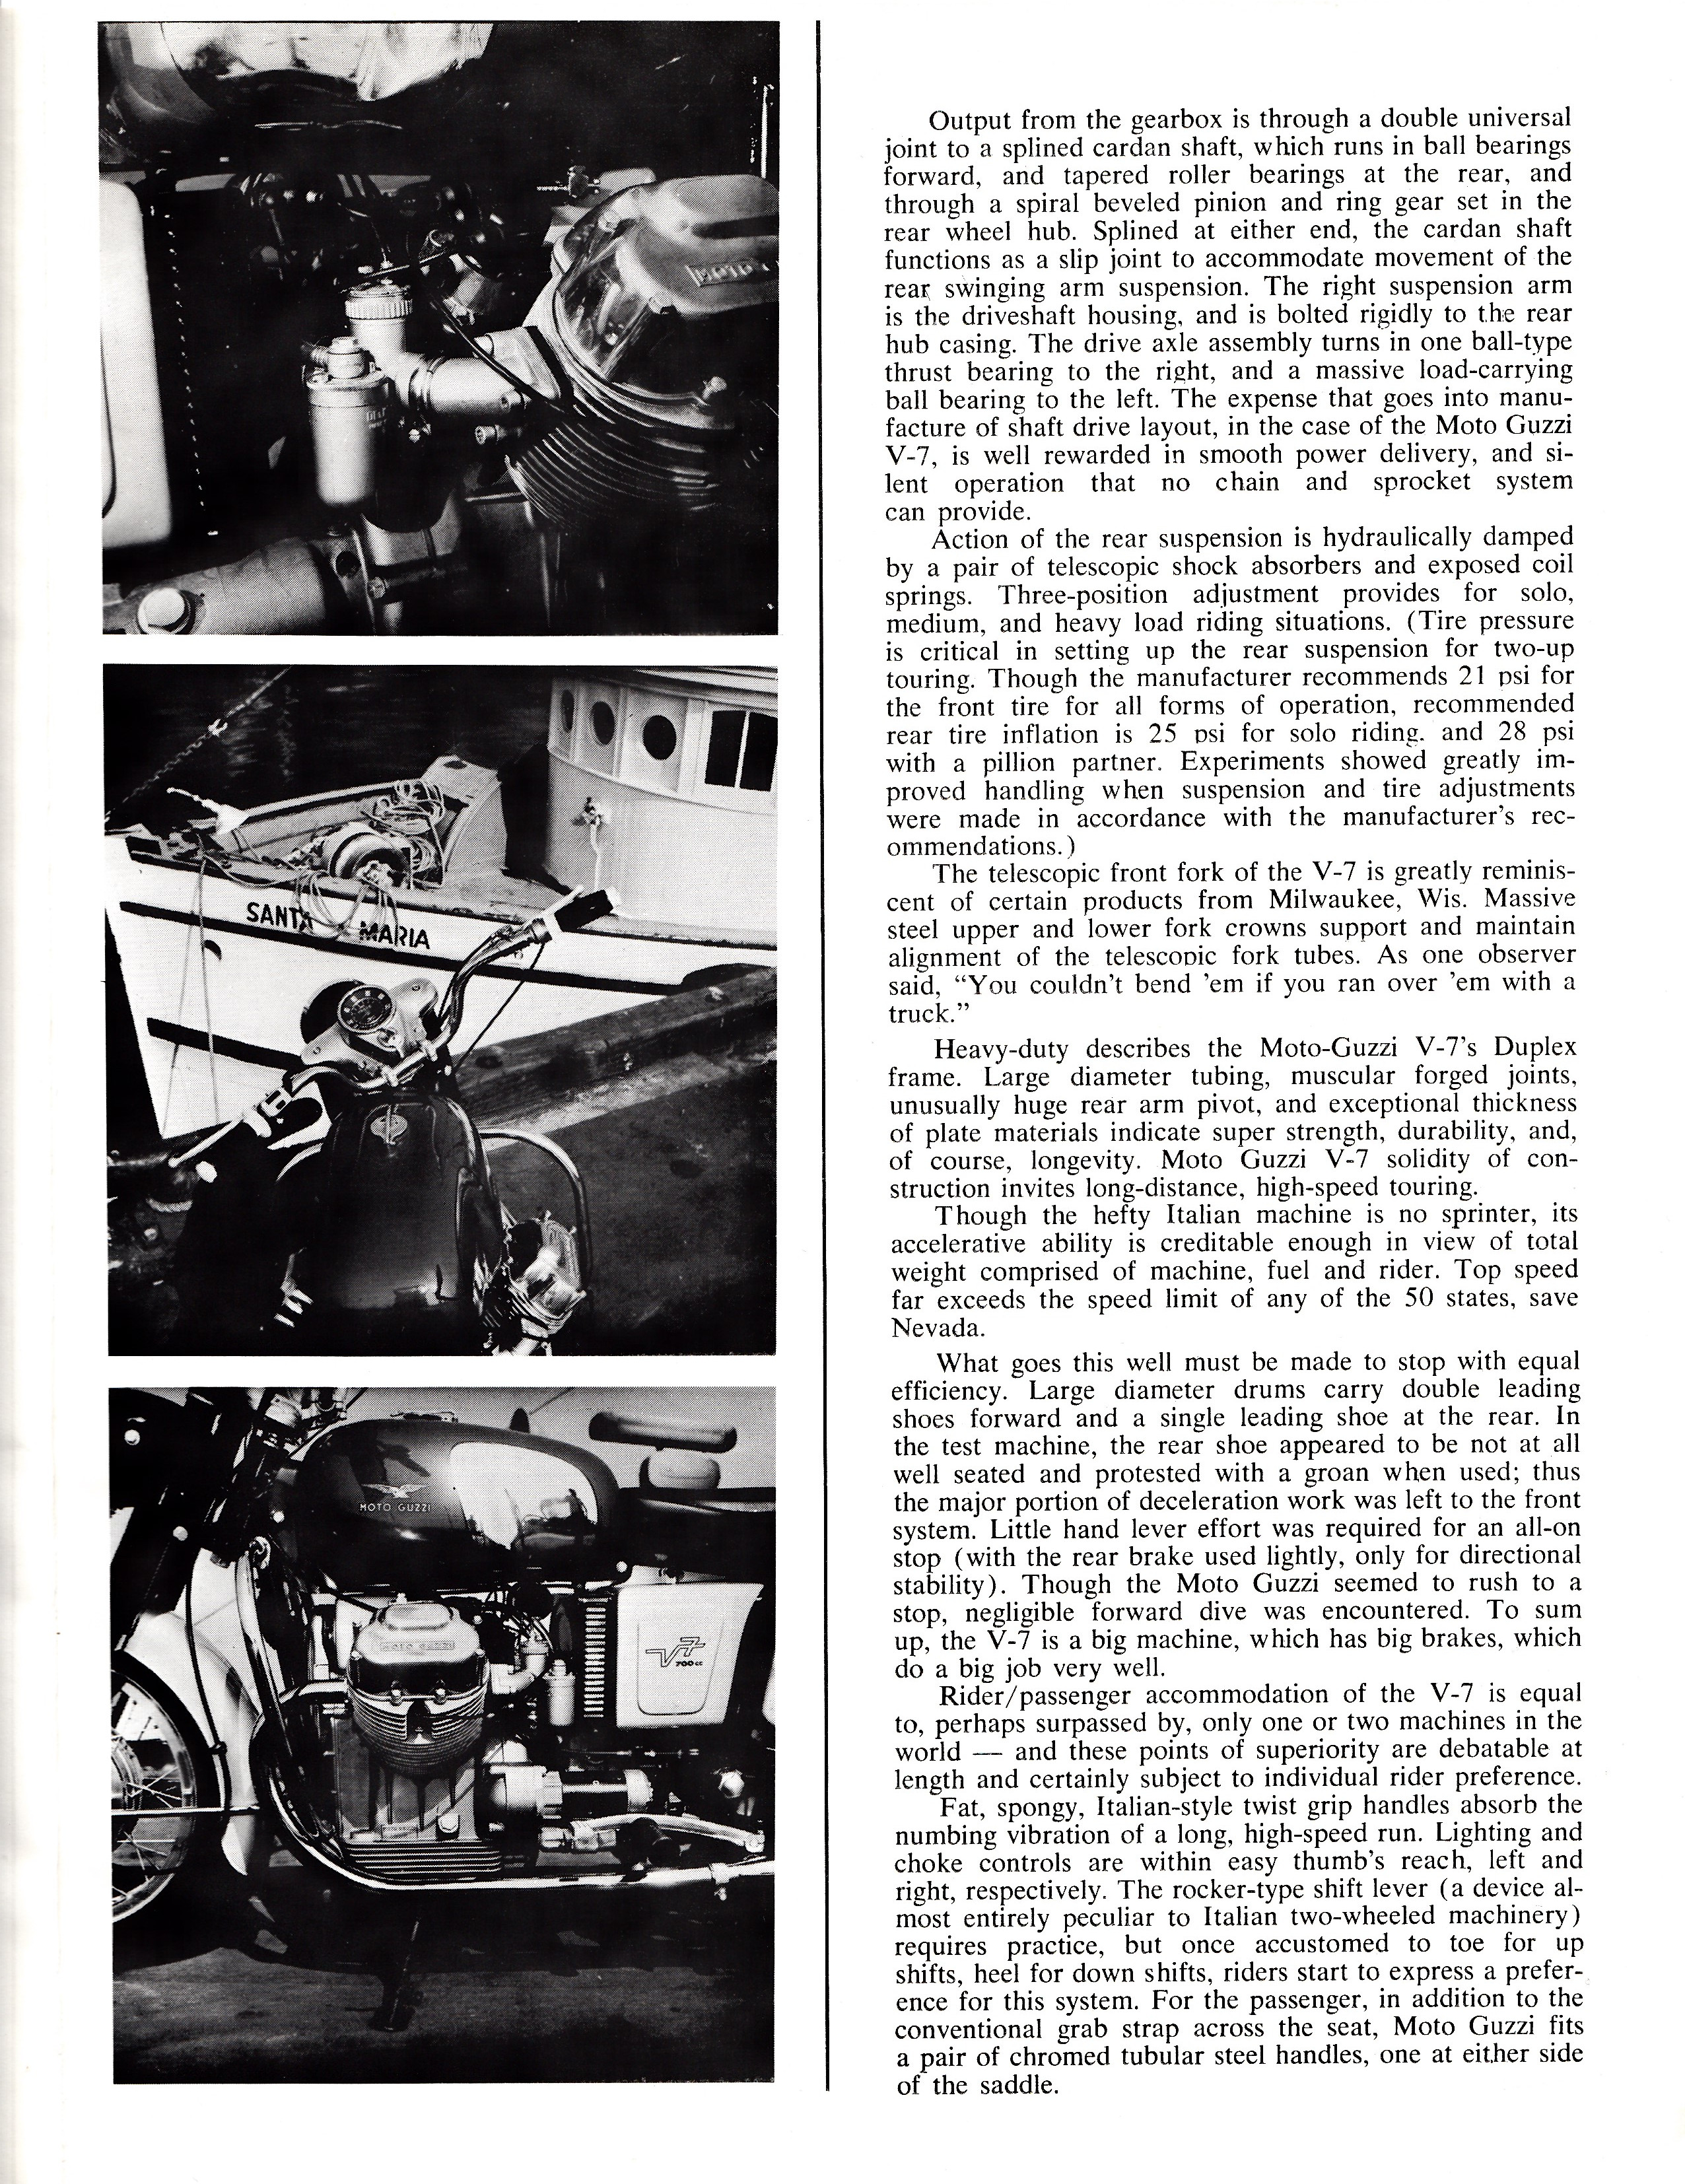 Moto Guzzi V700 factory brochure of magazine reviews, Page 3 of 8.